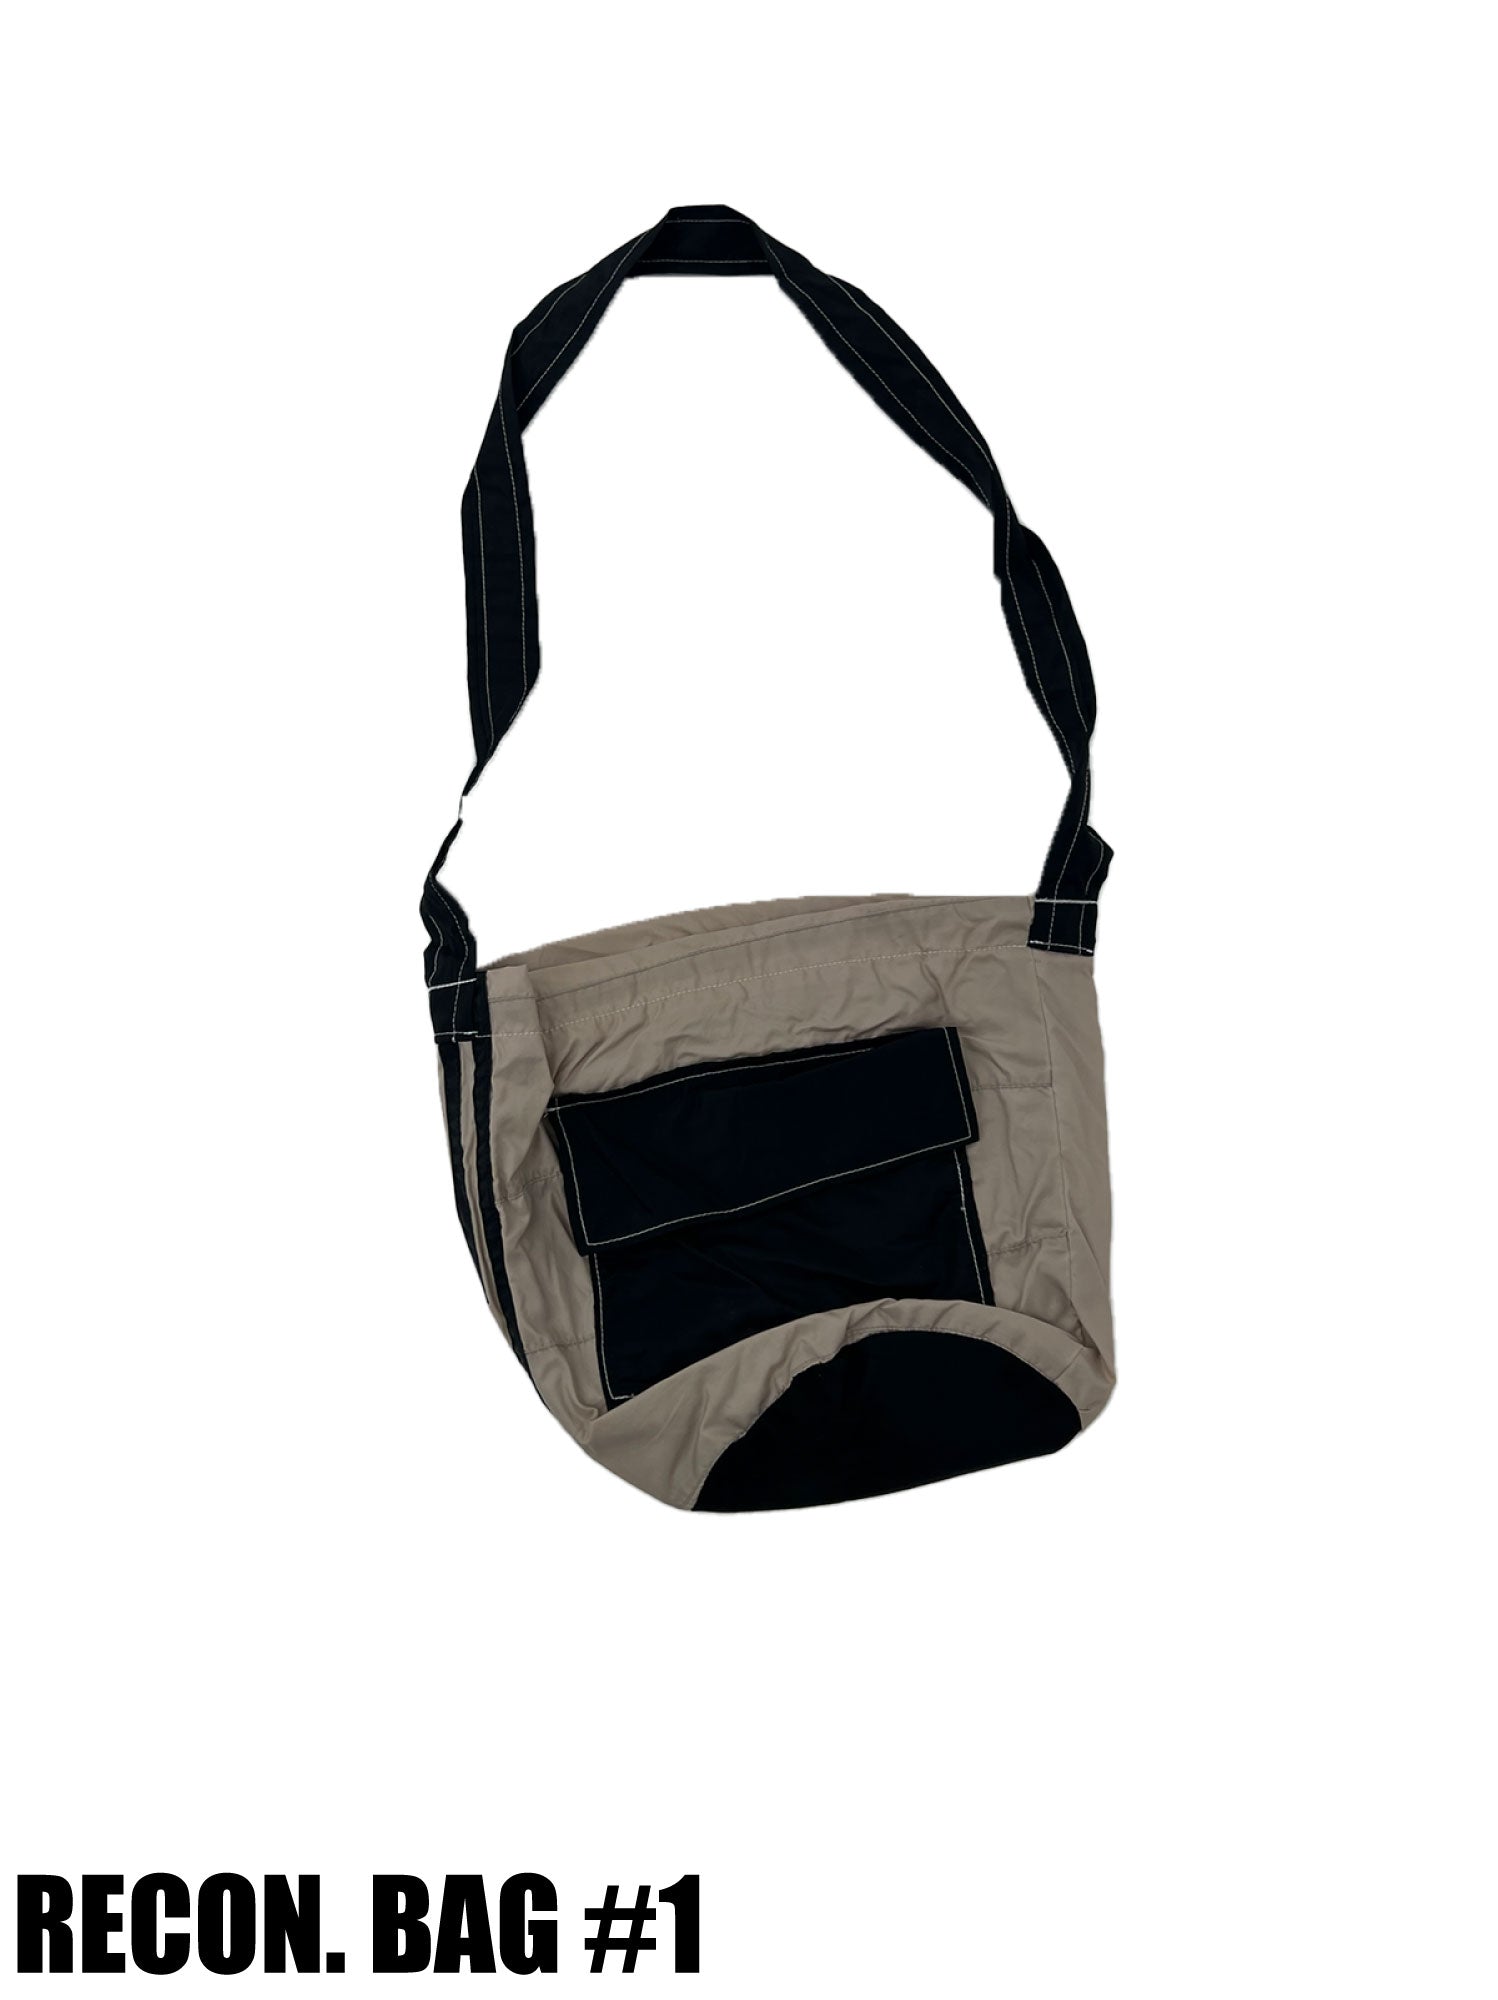 Vintage Denim Shoulder Bag by Sorella Boutique